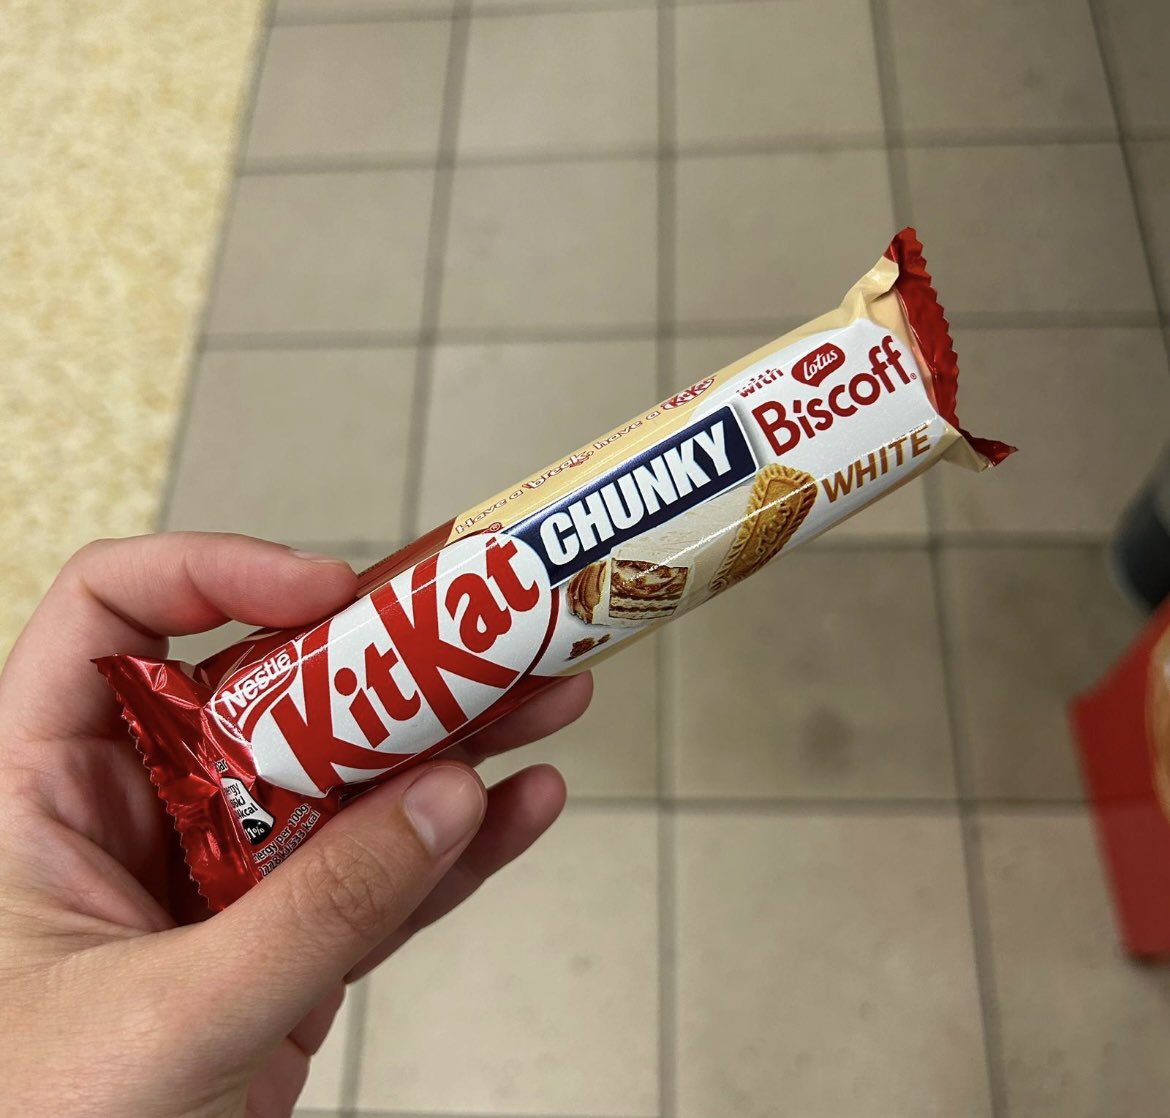 White KitKat Chunky x Biscoff! 👀 At Sainsbury’s @KITKAT @lotusbiscoffUK #kitkat #kitkatchunky #biscoff #haveabreakhaveakitkat #wellthisisnew